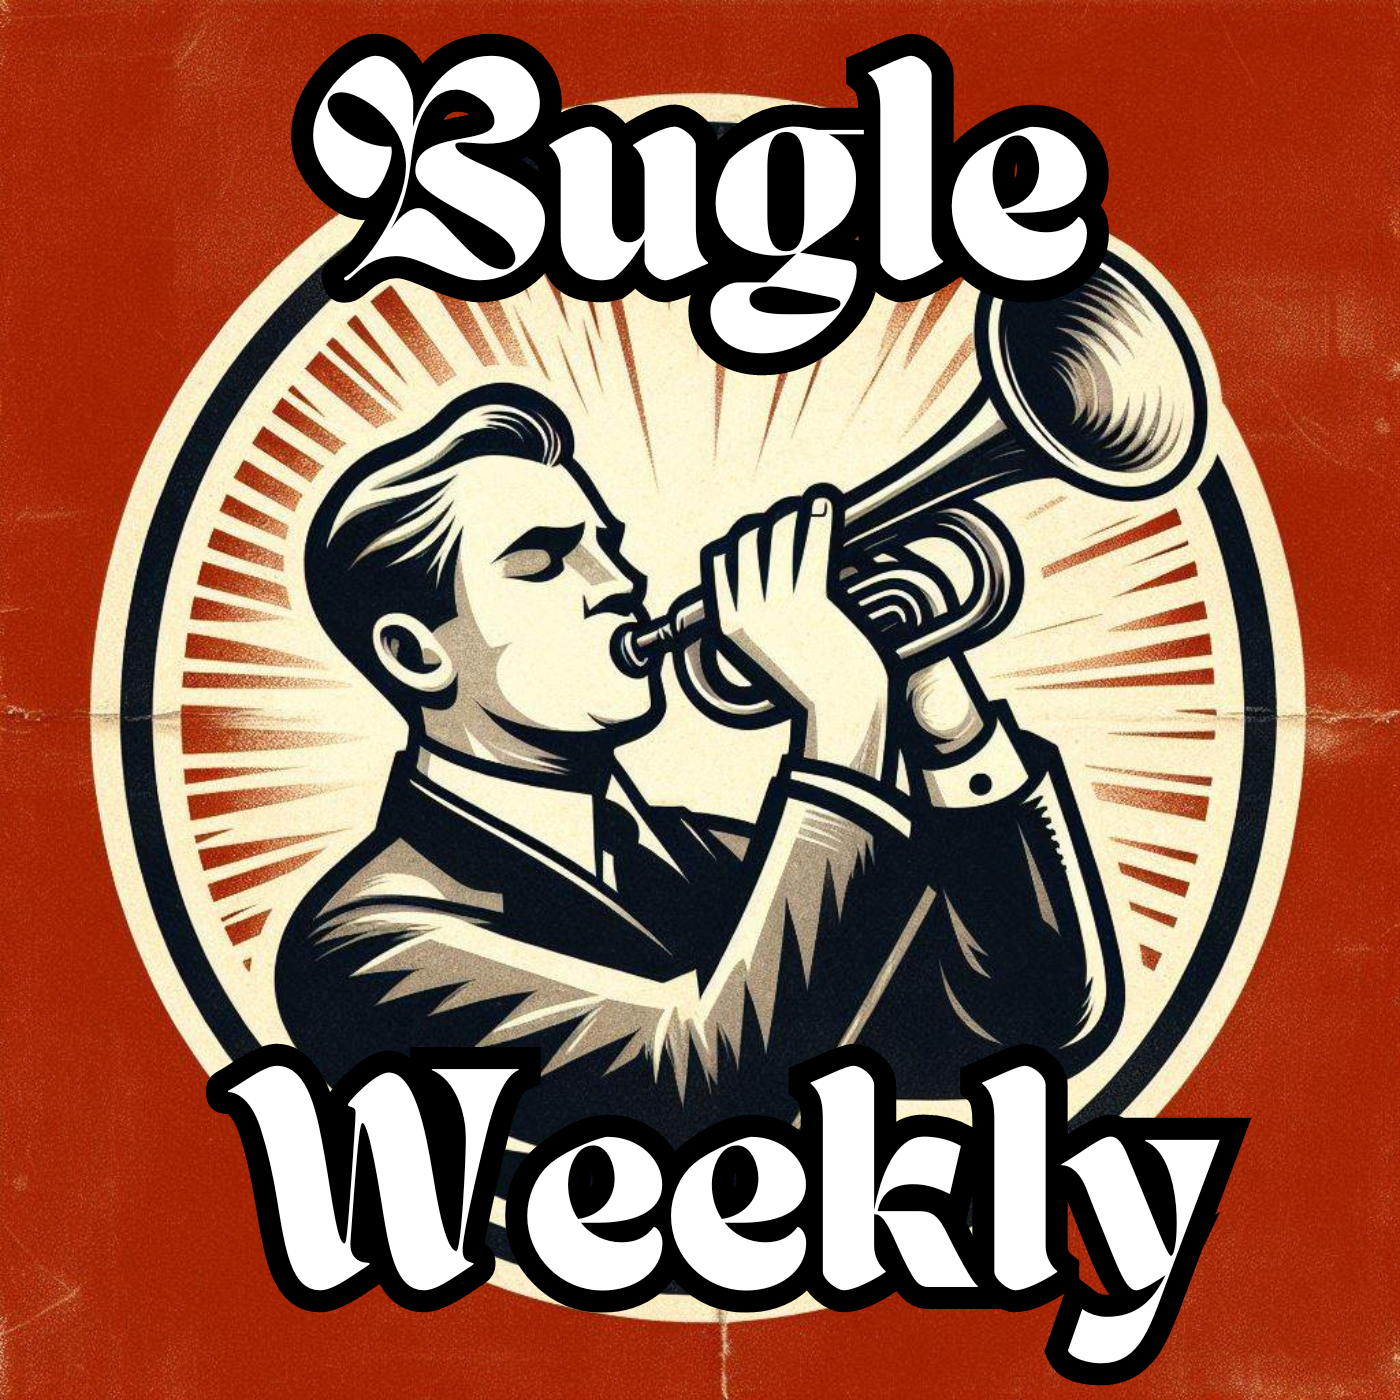 The Bugle Weekly